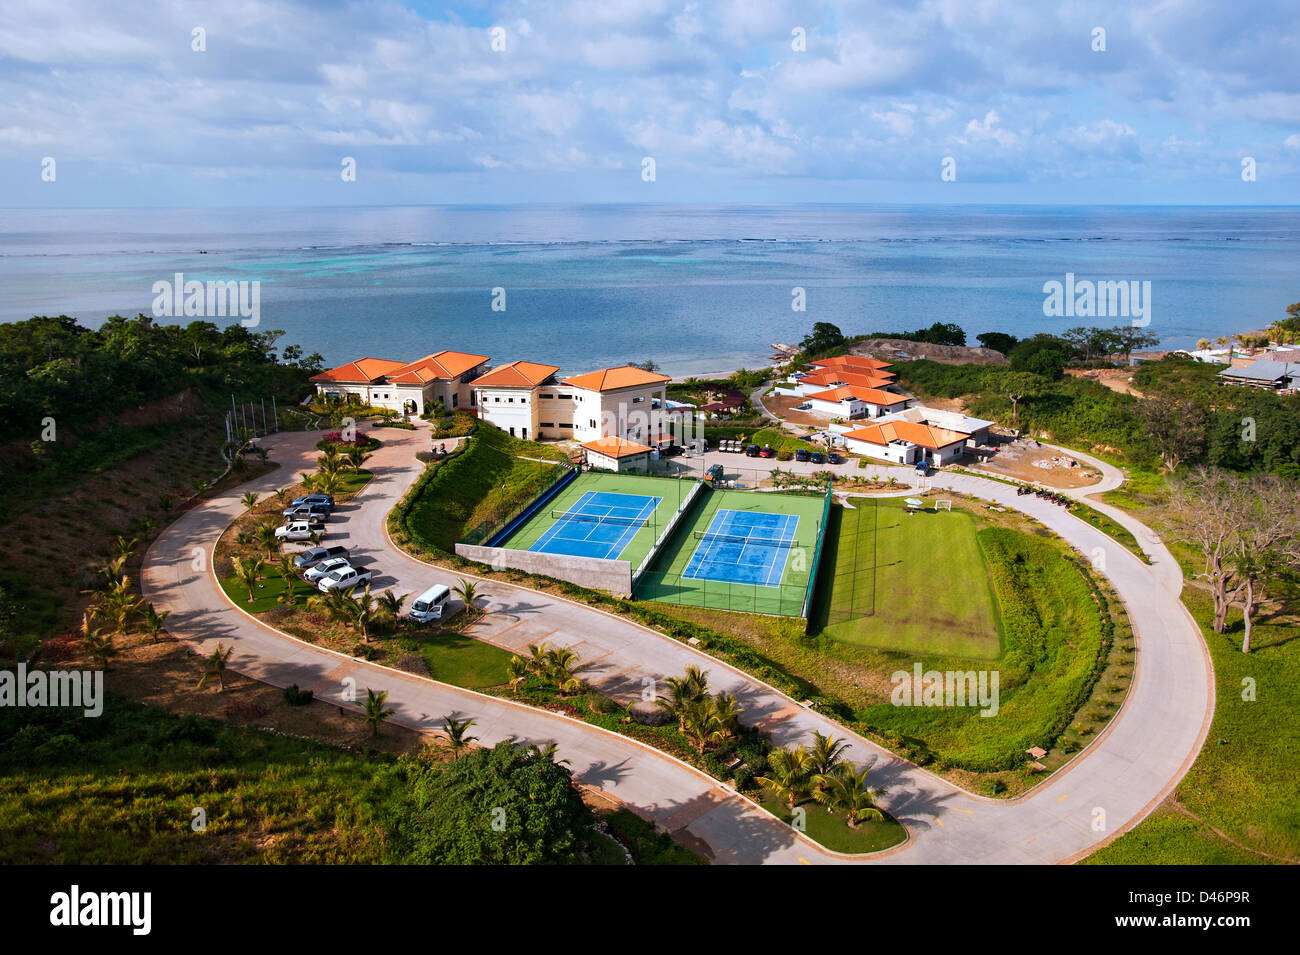 Vista aerea di immacolate Bay Resort, Roatan Foto Stock